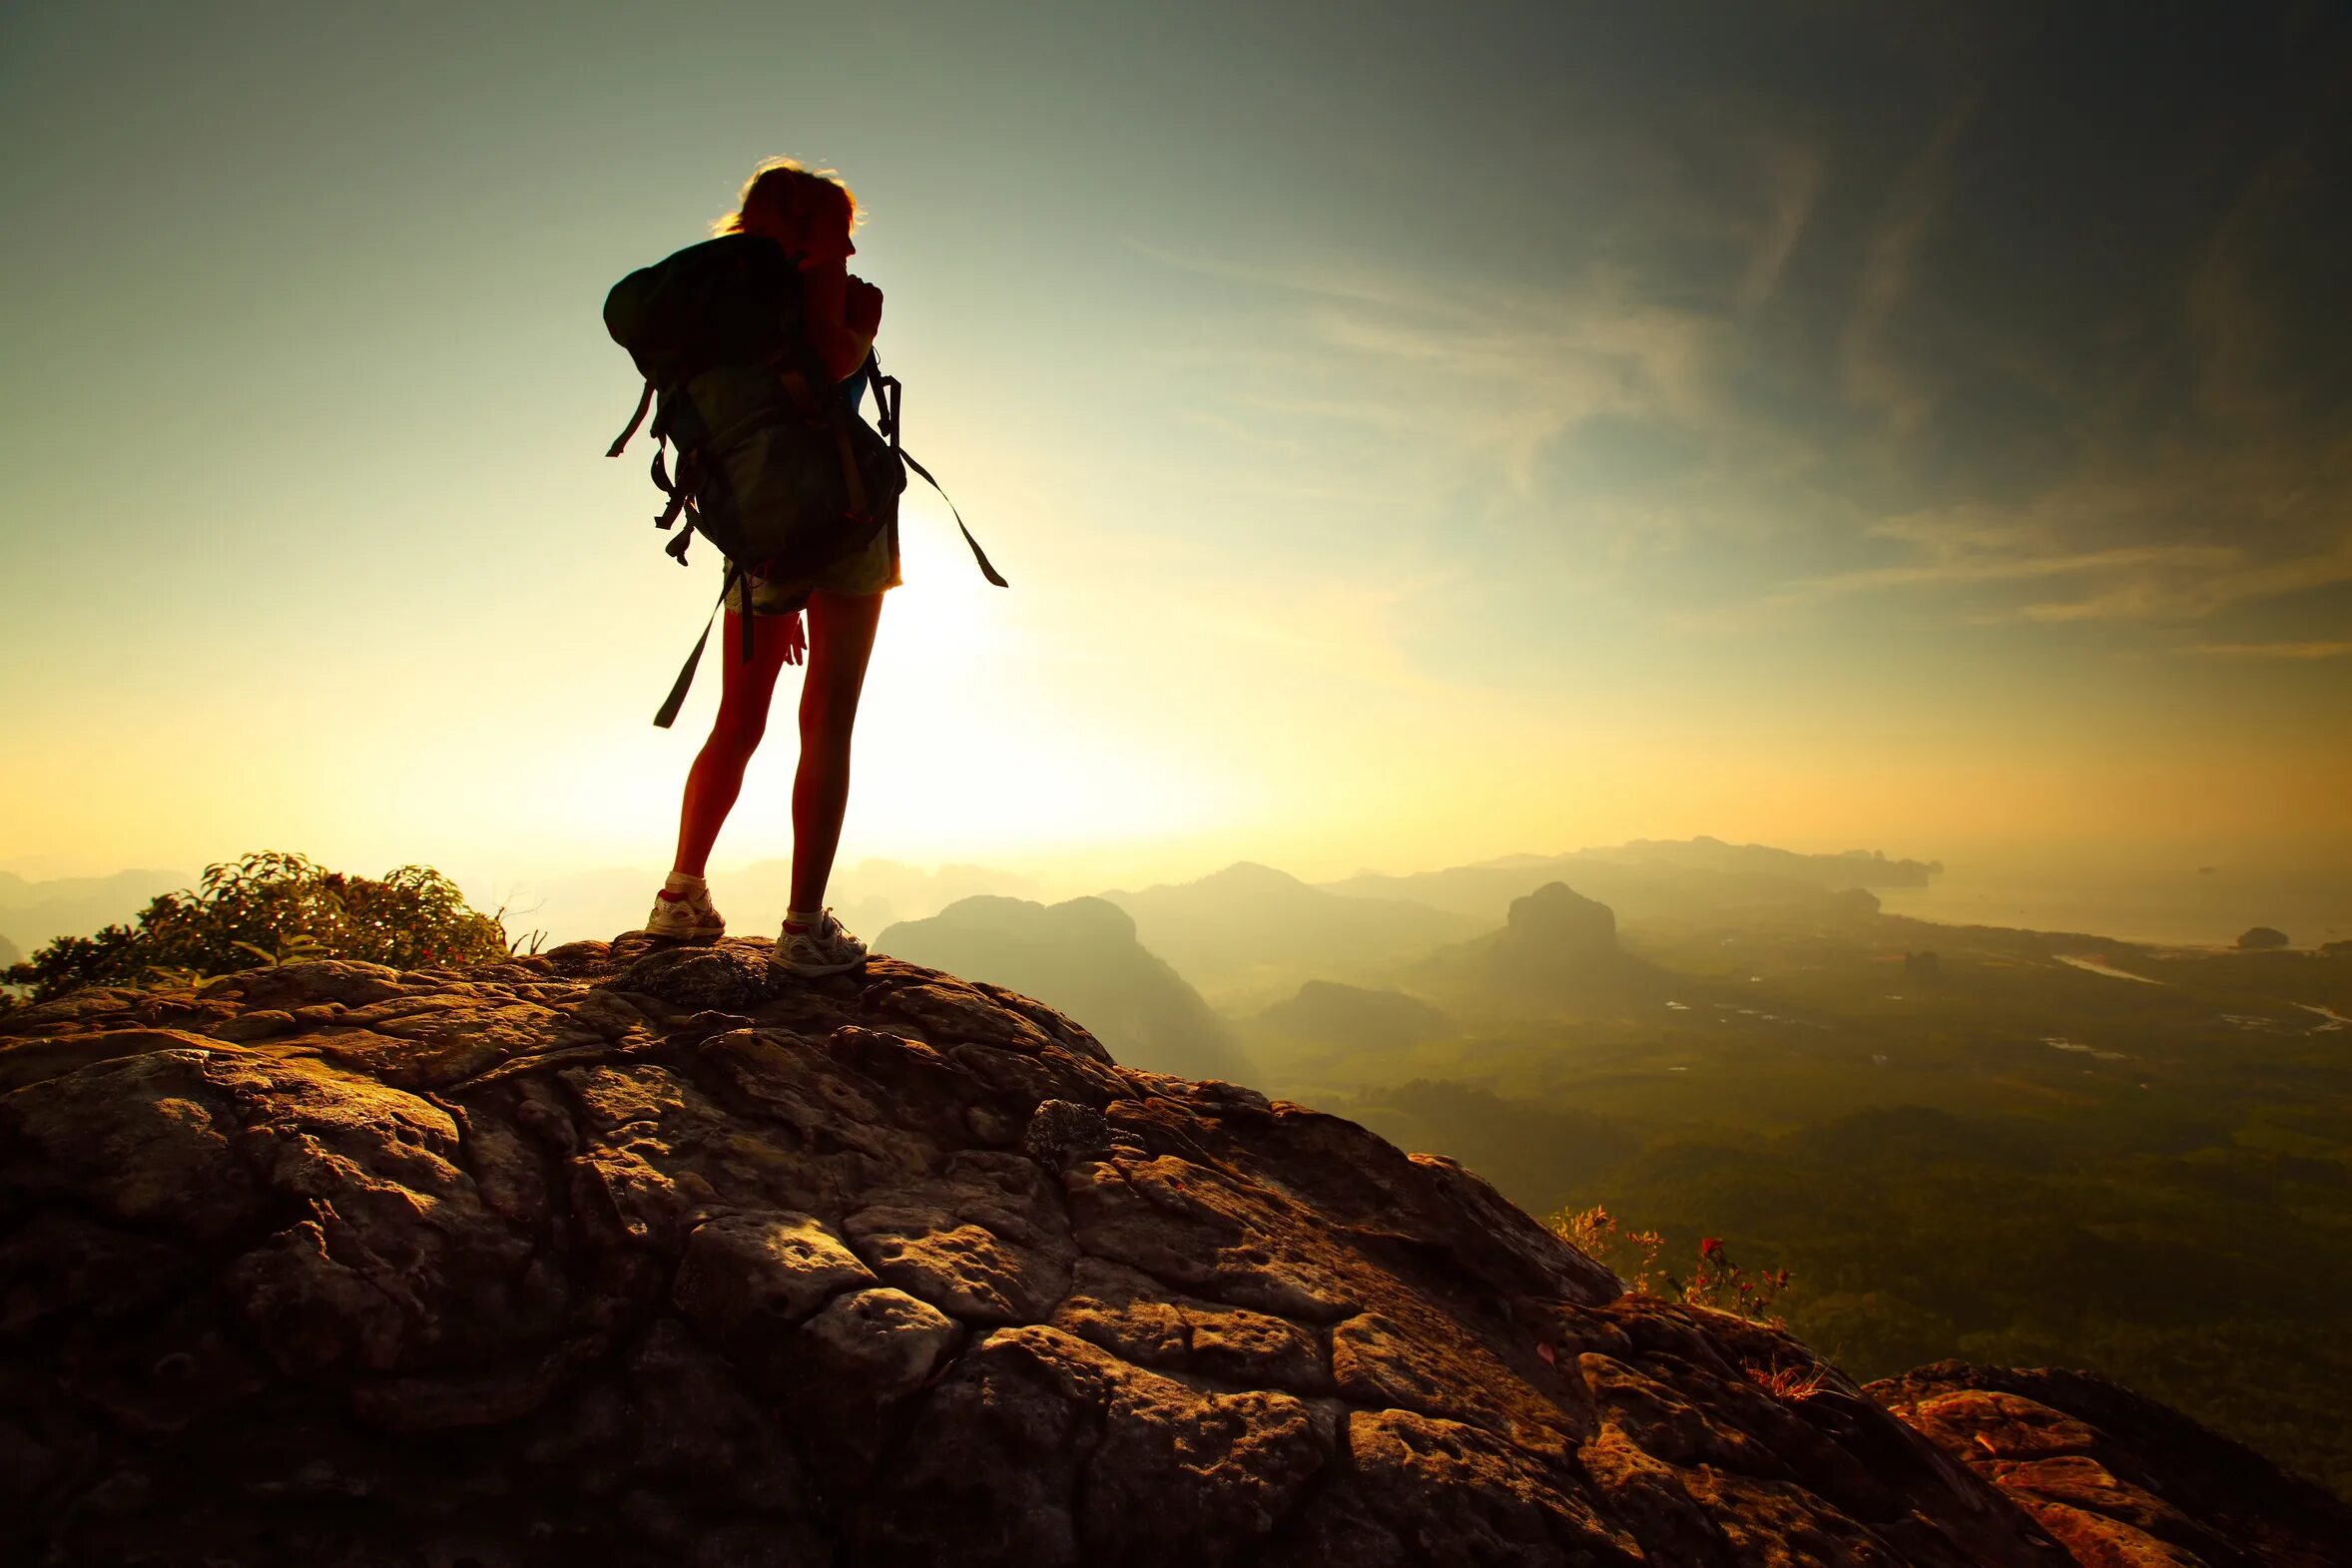 She traveled the world. Девушка на вершине горы. Человек с рюкзаком. Человек на вершине горы. Фотосессия в горах.